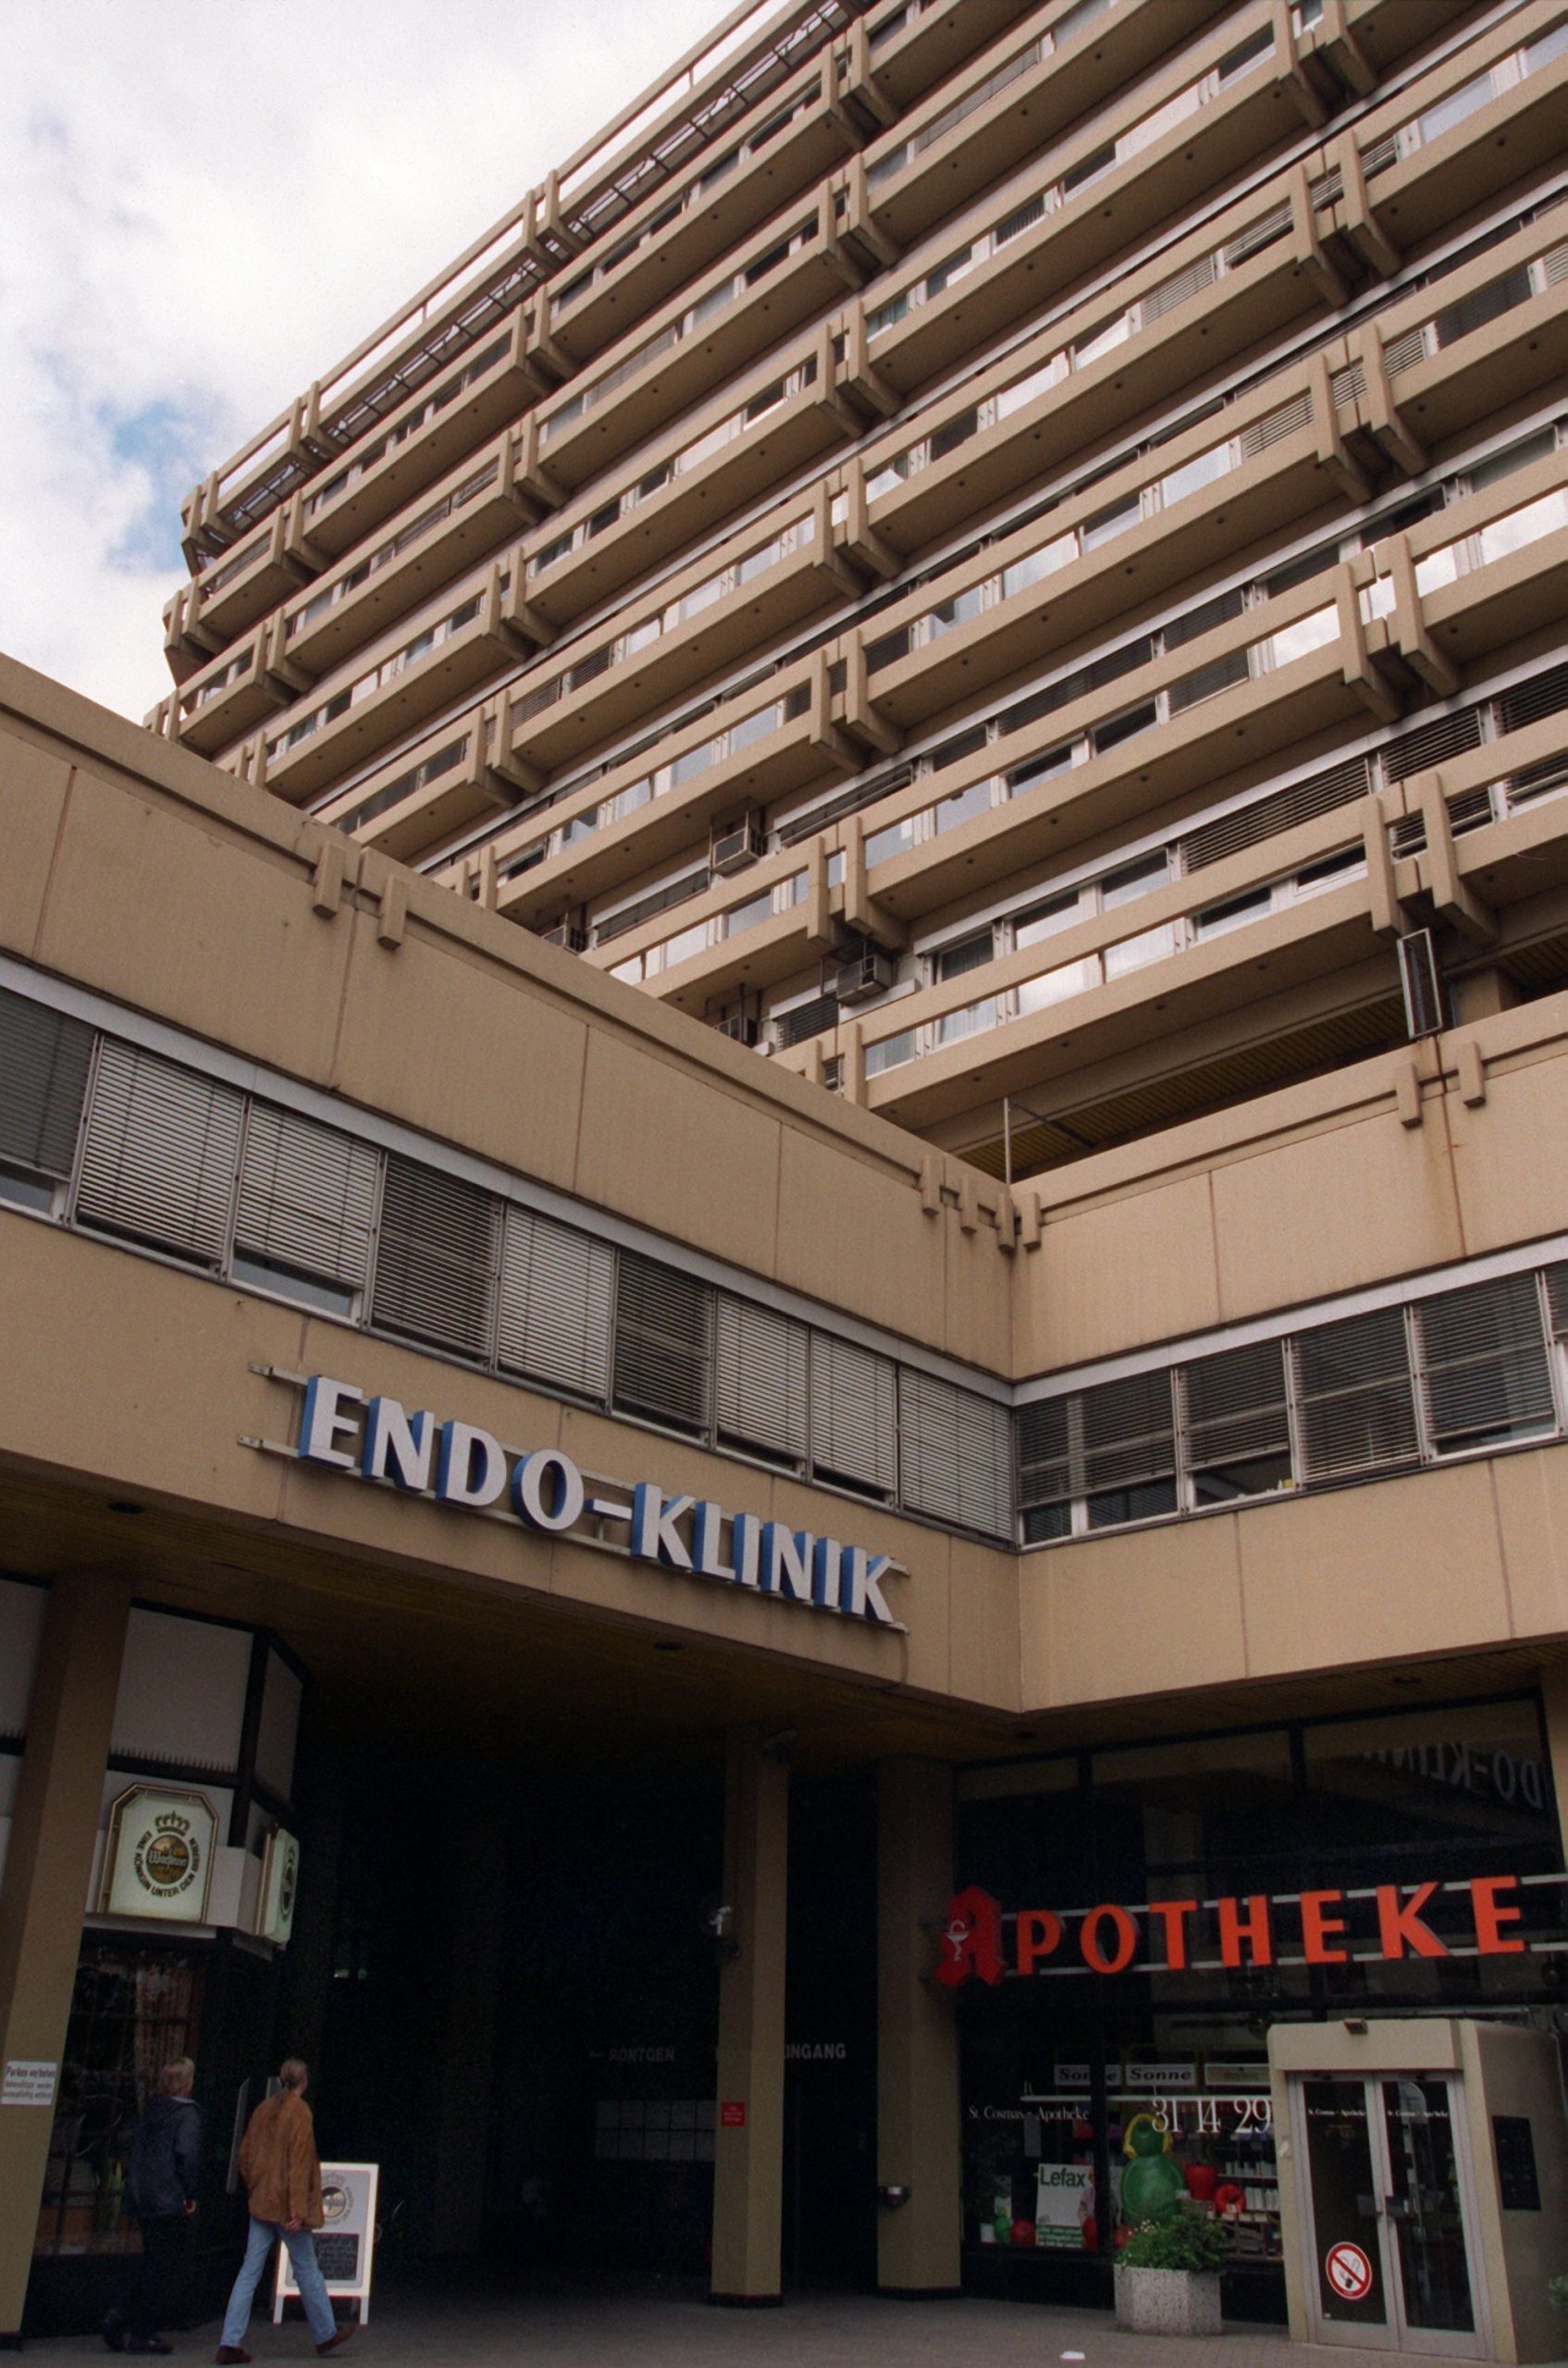 Endo-Klinik in Hamburg.